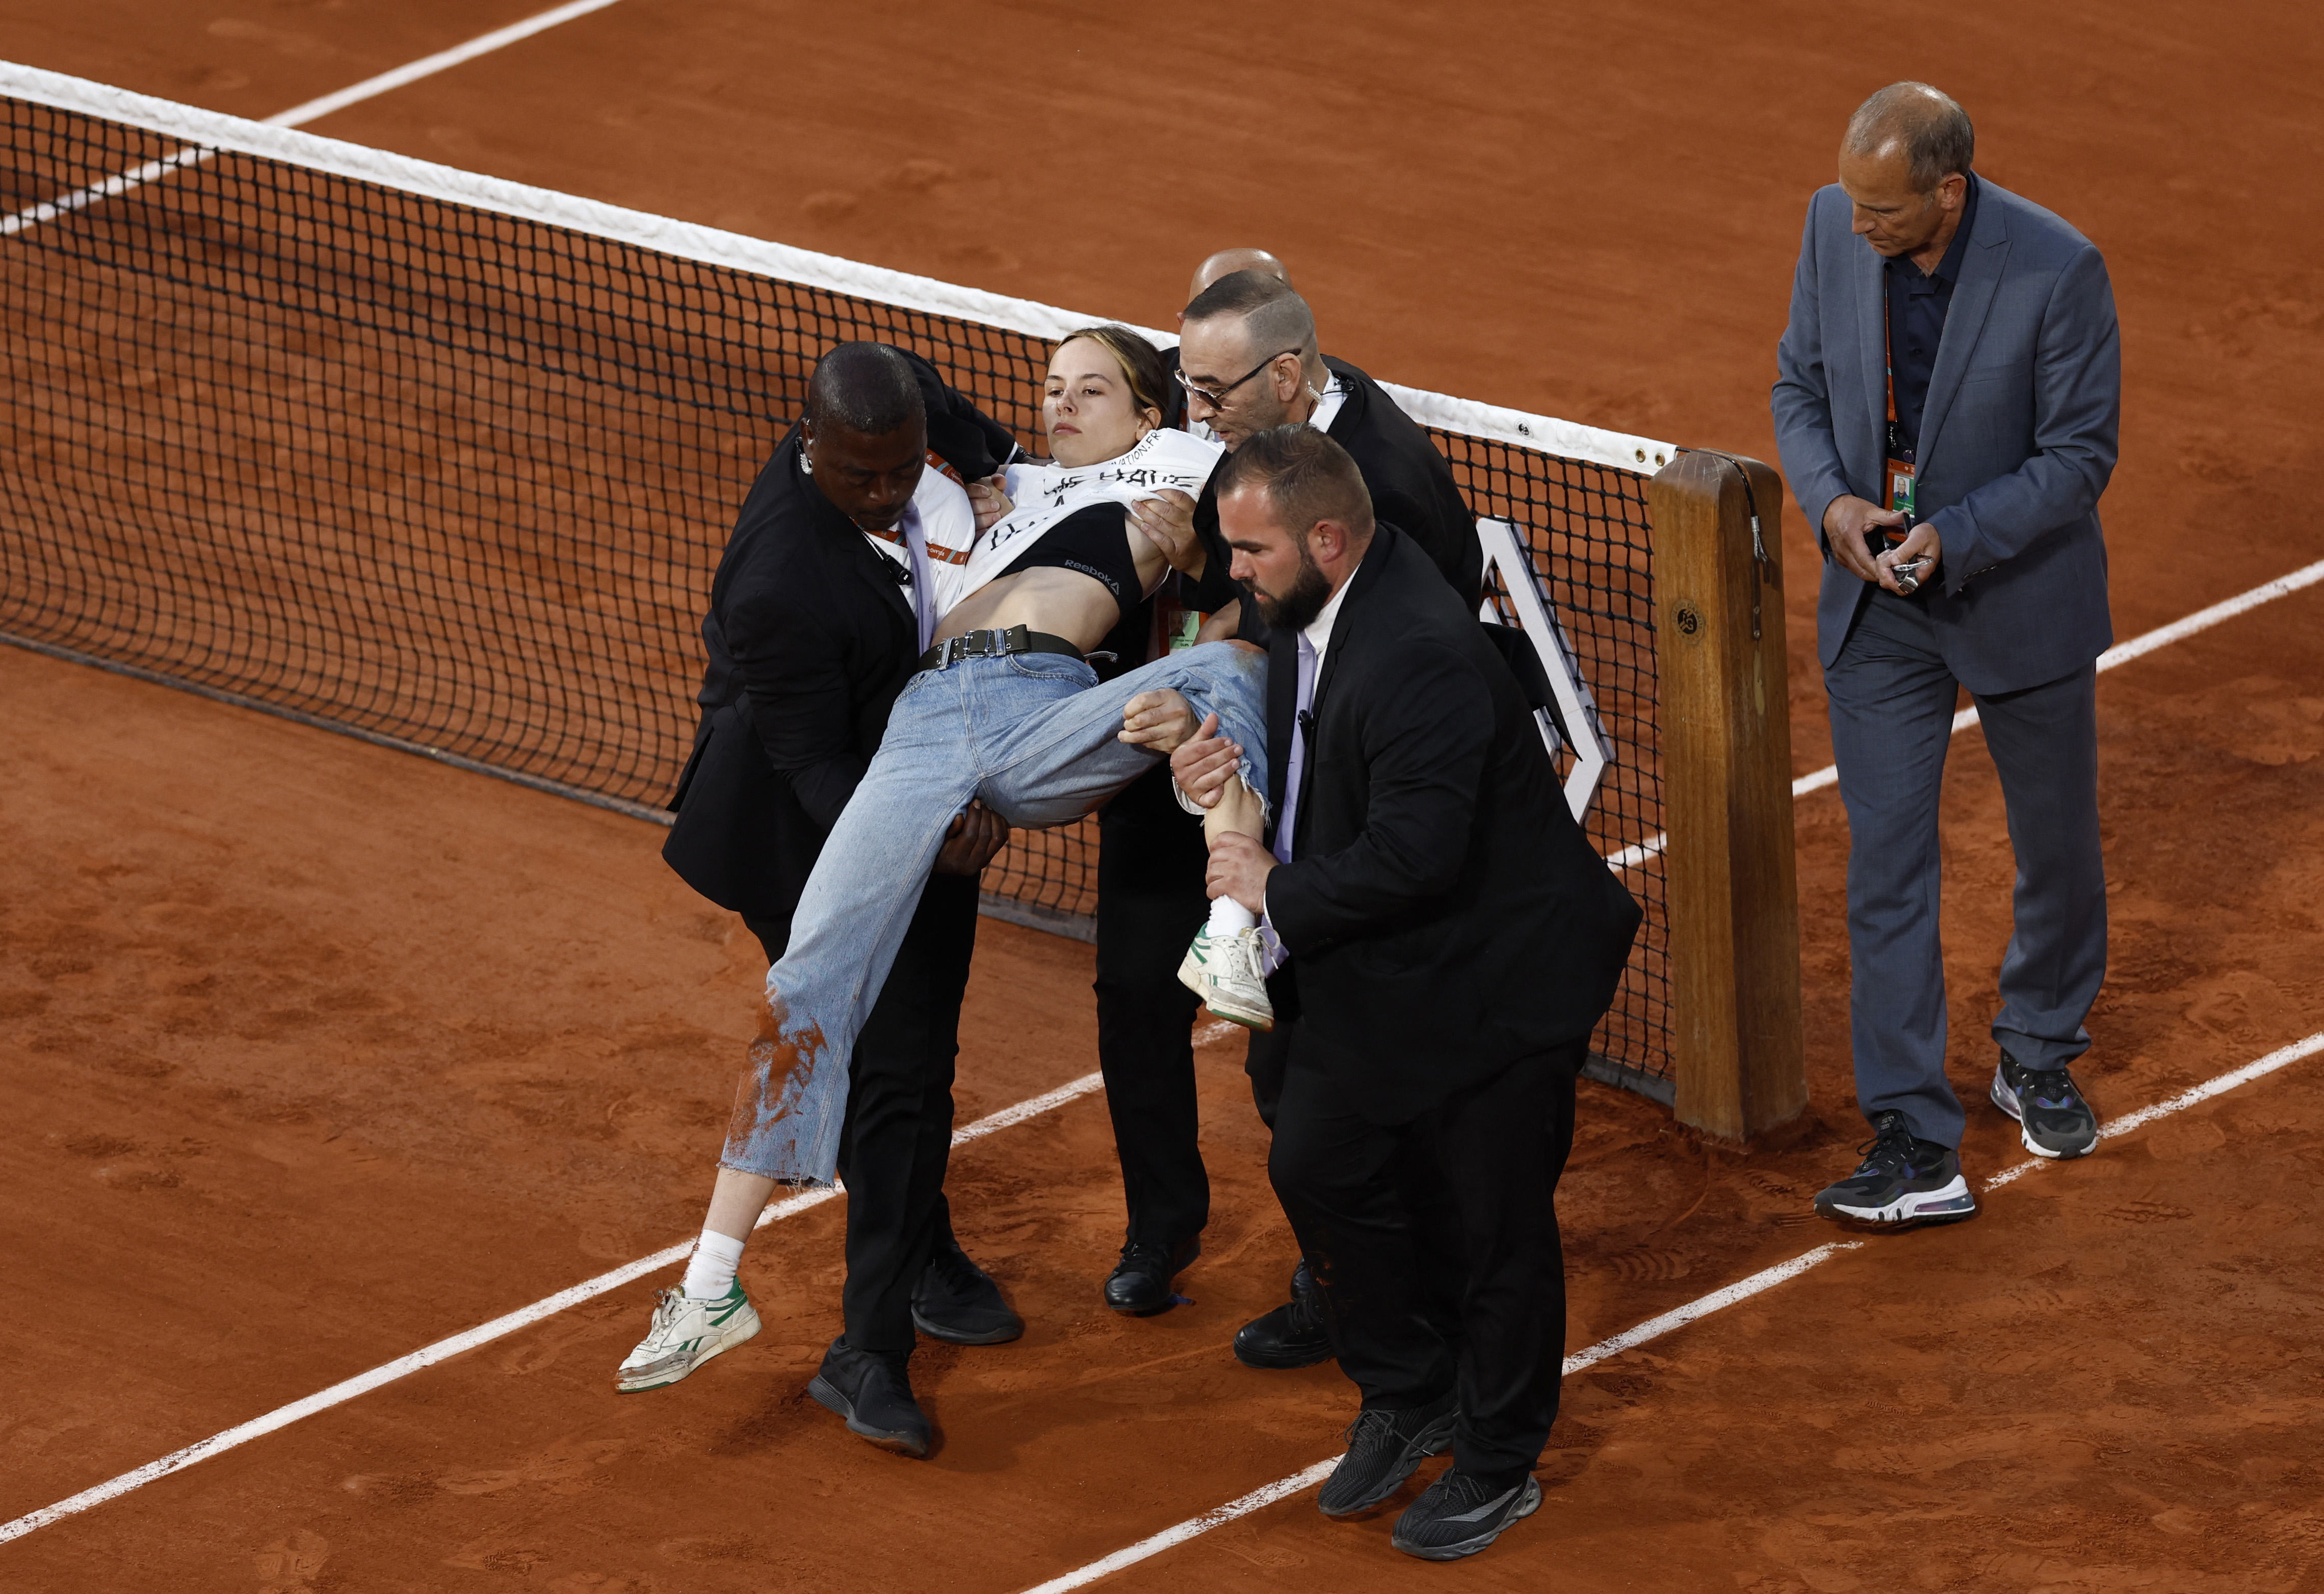 Los agentes de seguridad retiraron de la cancha a la joven activista que interrumpió la segunda semifinal de Roland Garros (Foto: REUTERS)